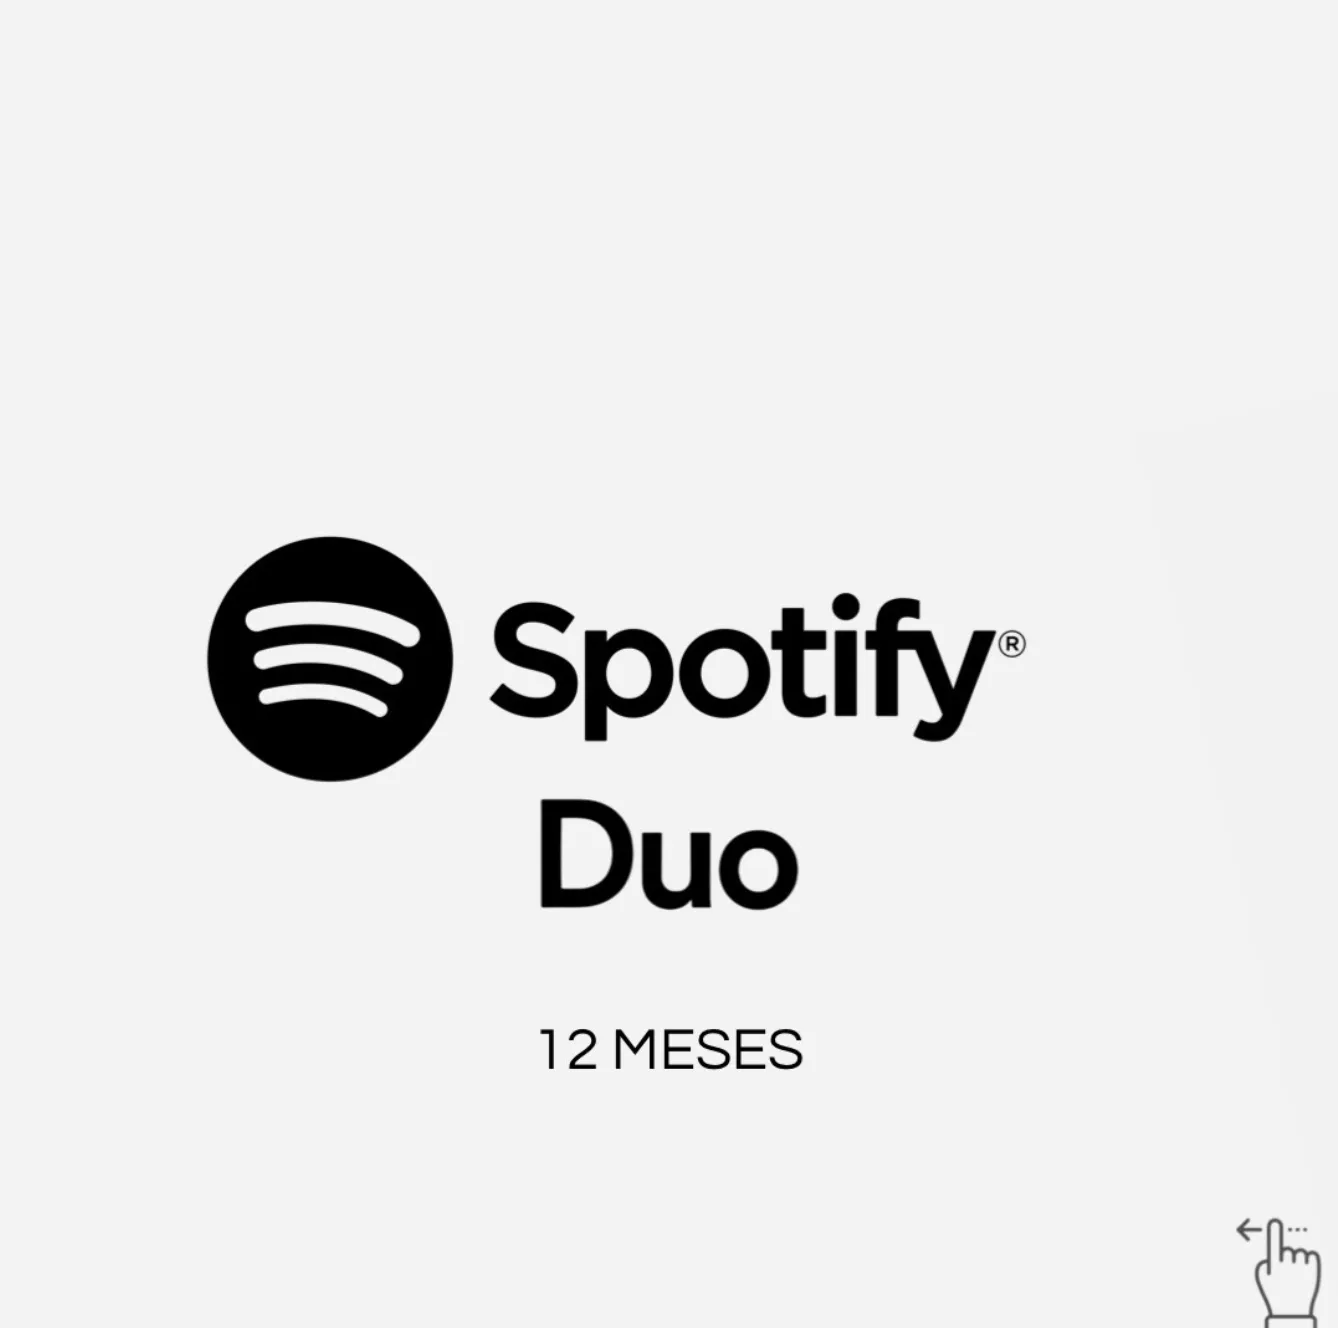 Spotify DUO